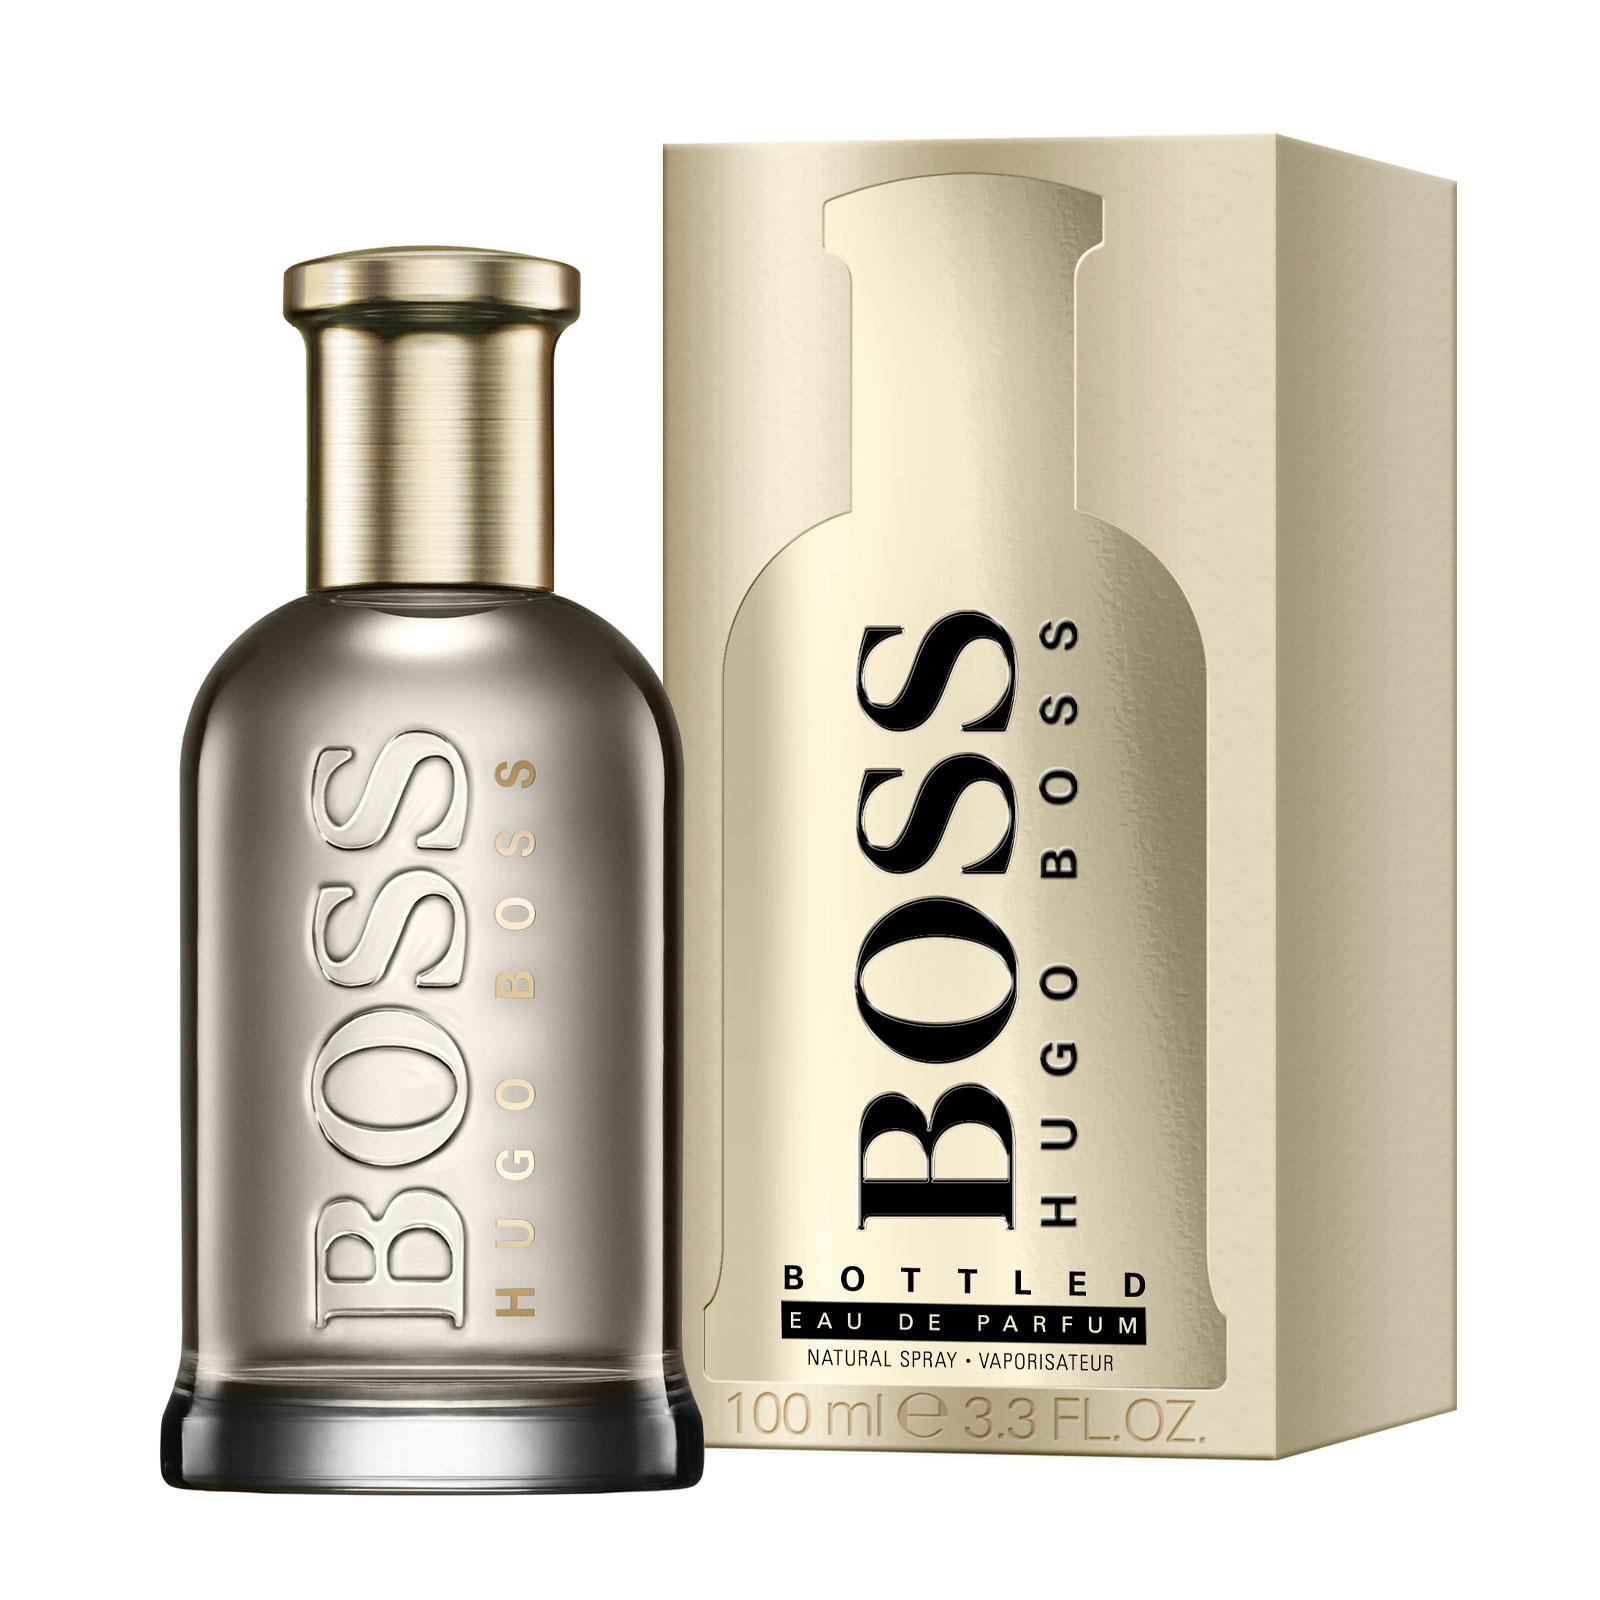 Hugo Boss Bottled Eau de Parfum 100ml | SEPHORA UK